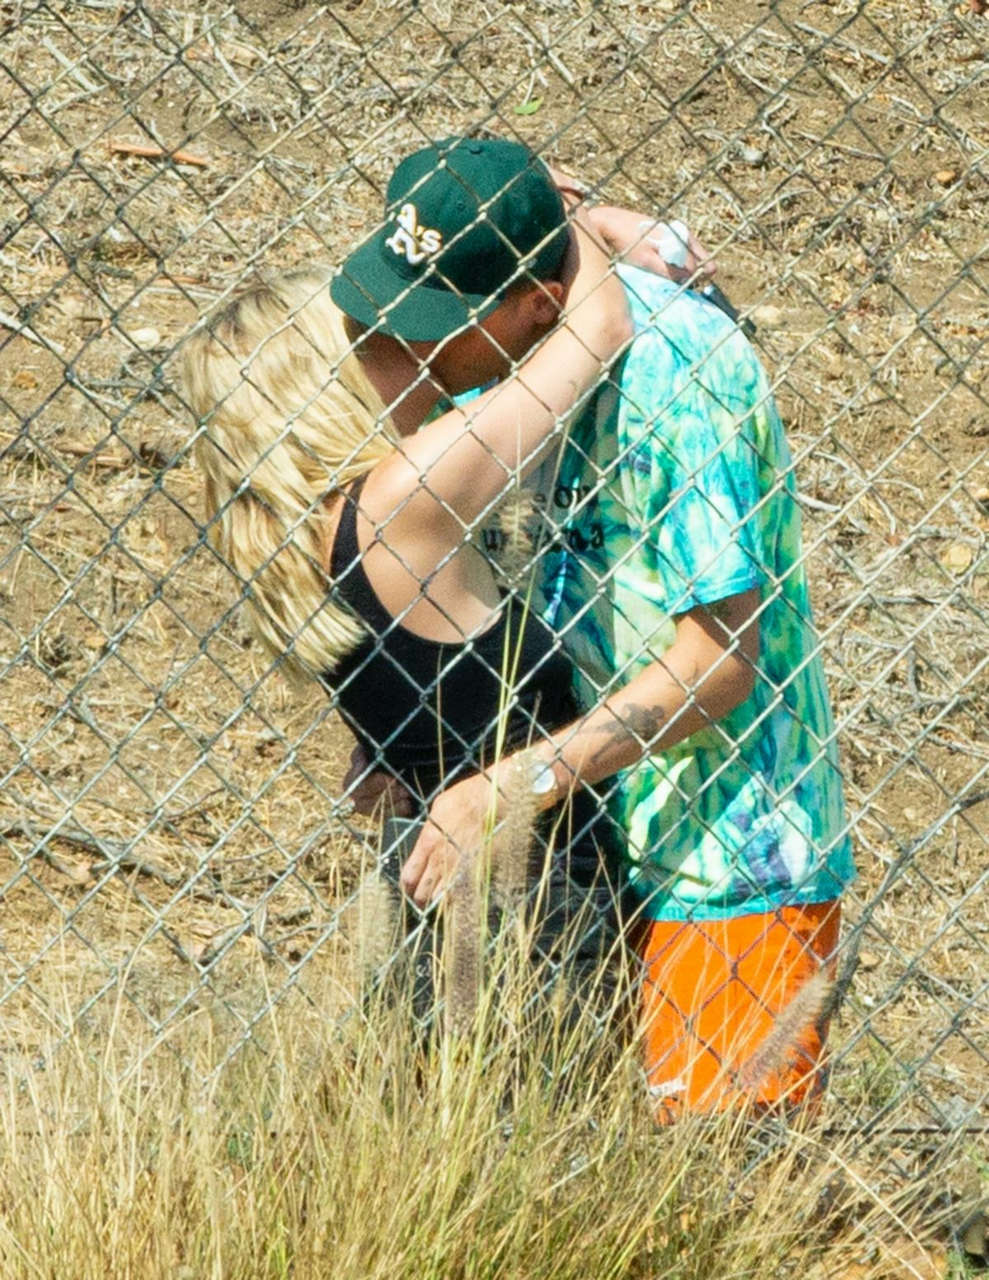 Ashley Benson G Eazy Out Kissing Malibu